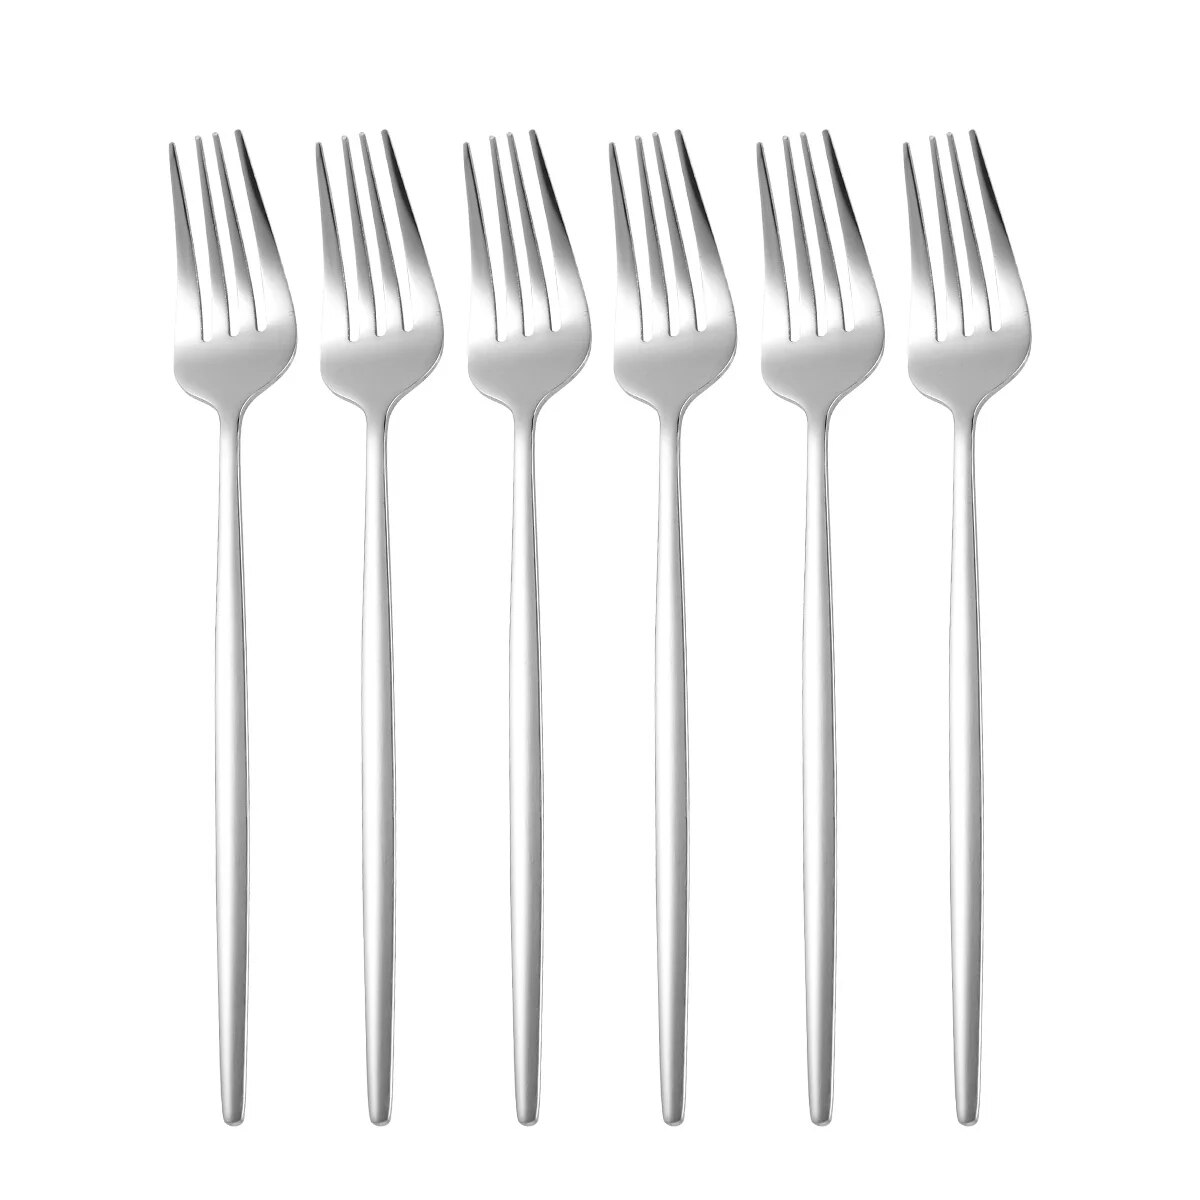 6pcs Set Of Golden Fork Cutlery Set Stainless Steel Cutlery Set Household Kitchen Cutlery Dishwasher Safe Cutlery Set